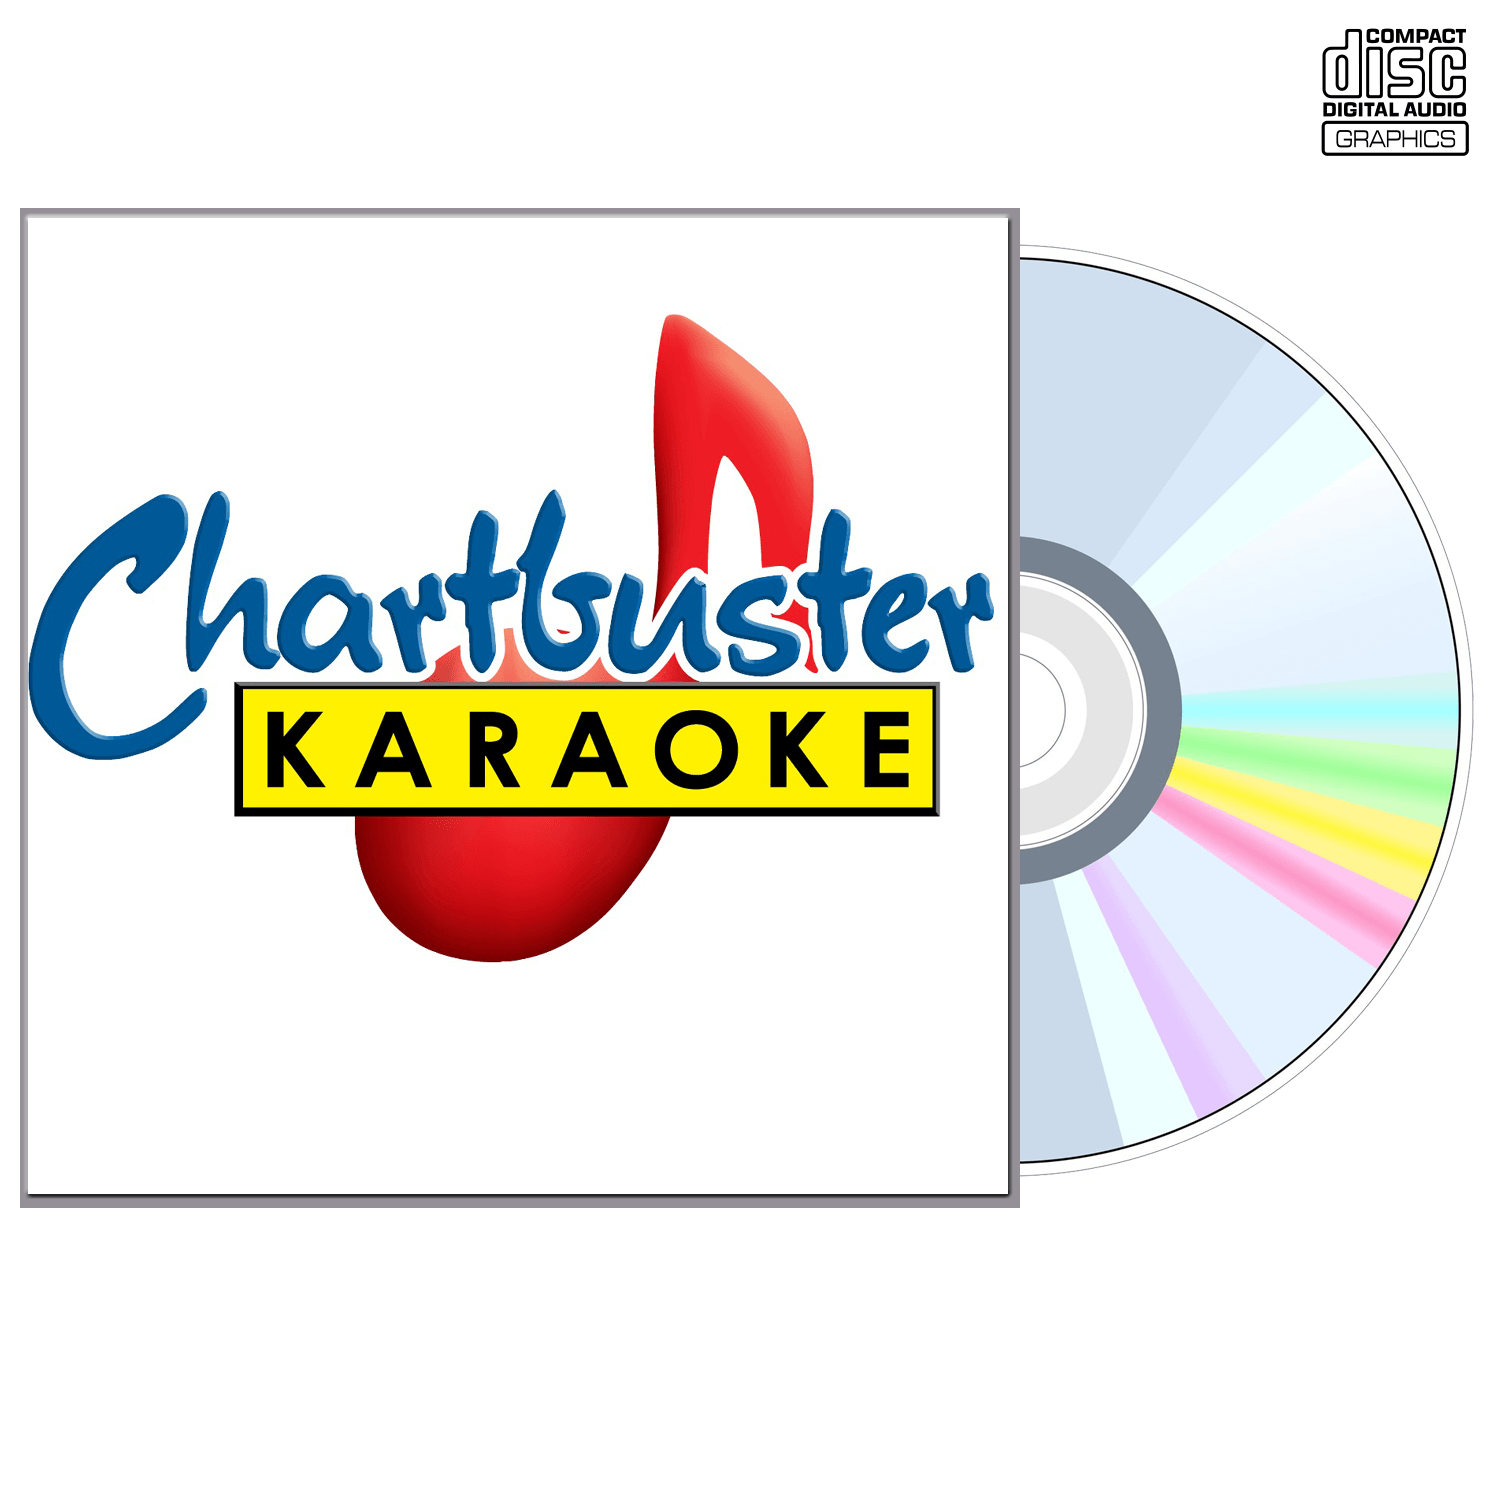 Ultimate 90's Collection Vol 10 - CD+G - Chartbuster Karaoke - Karaoke Home Entertainment